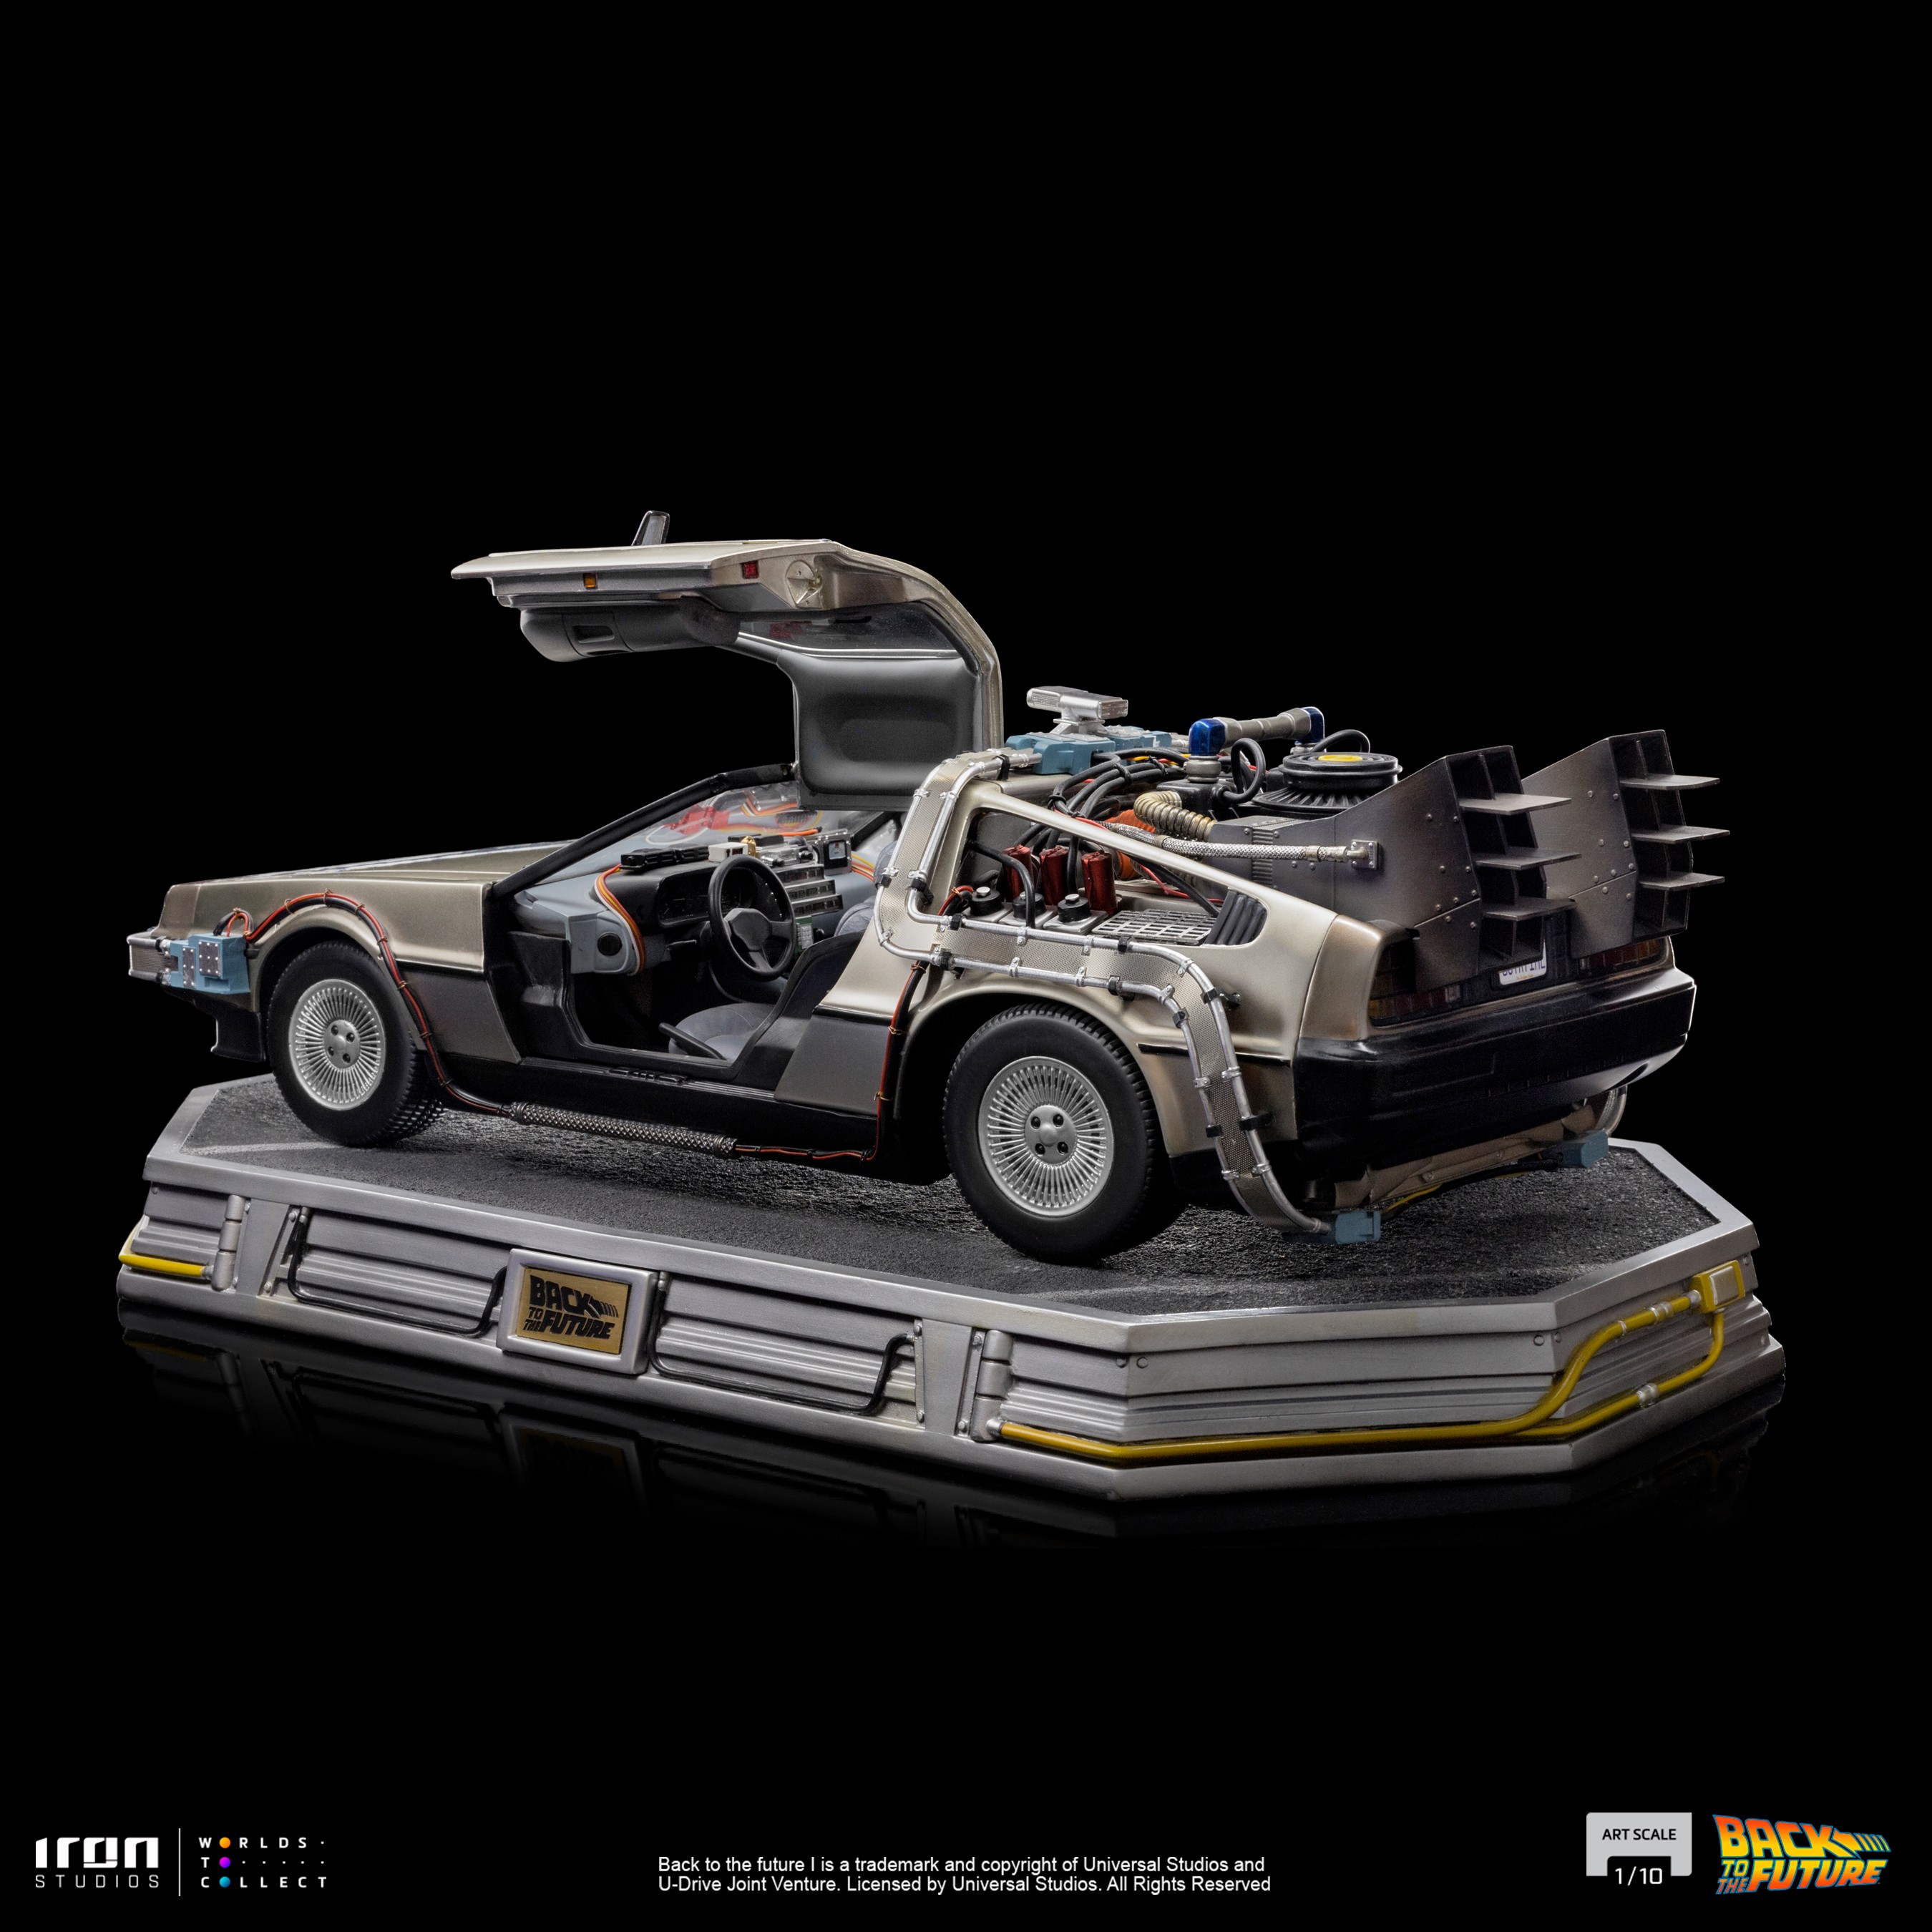 DeLorean Collector Edition (Prototype Shown) View 8